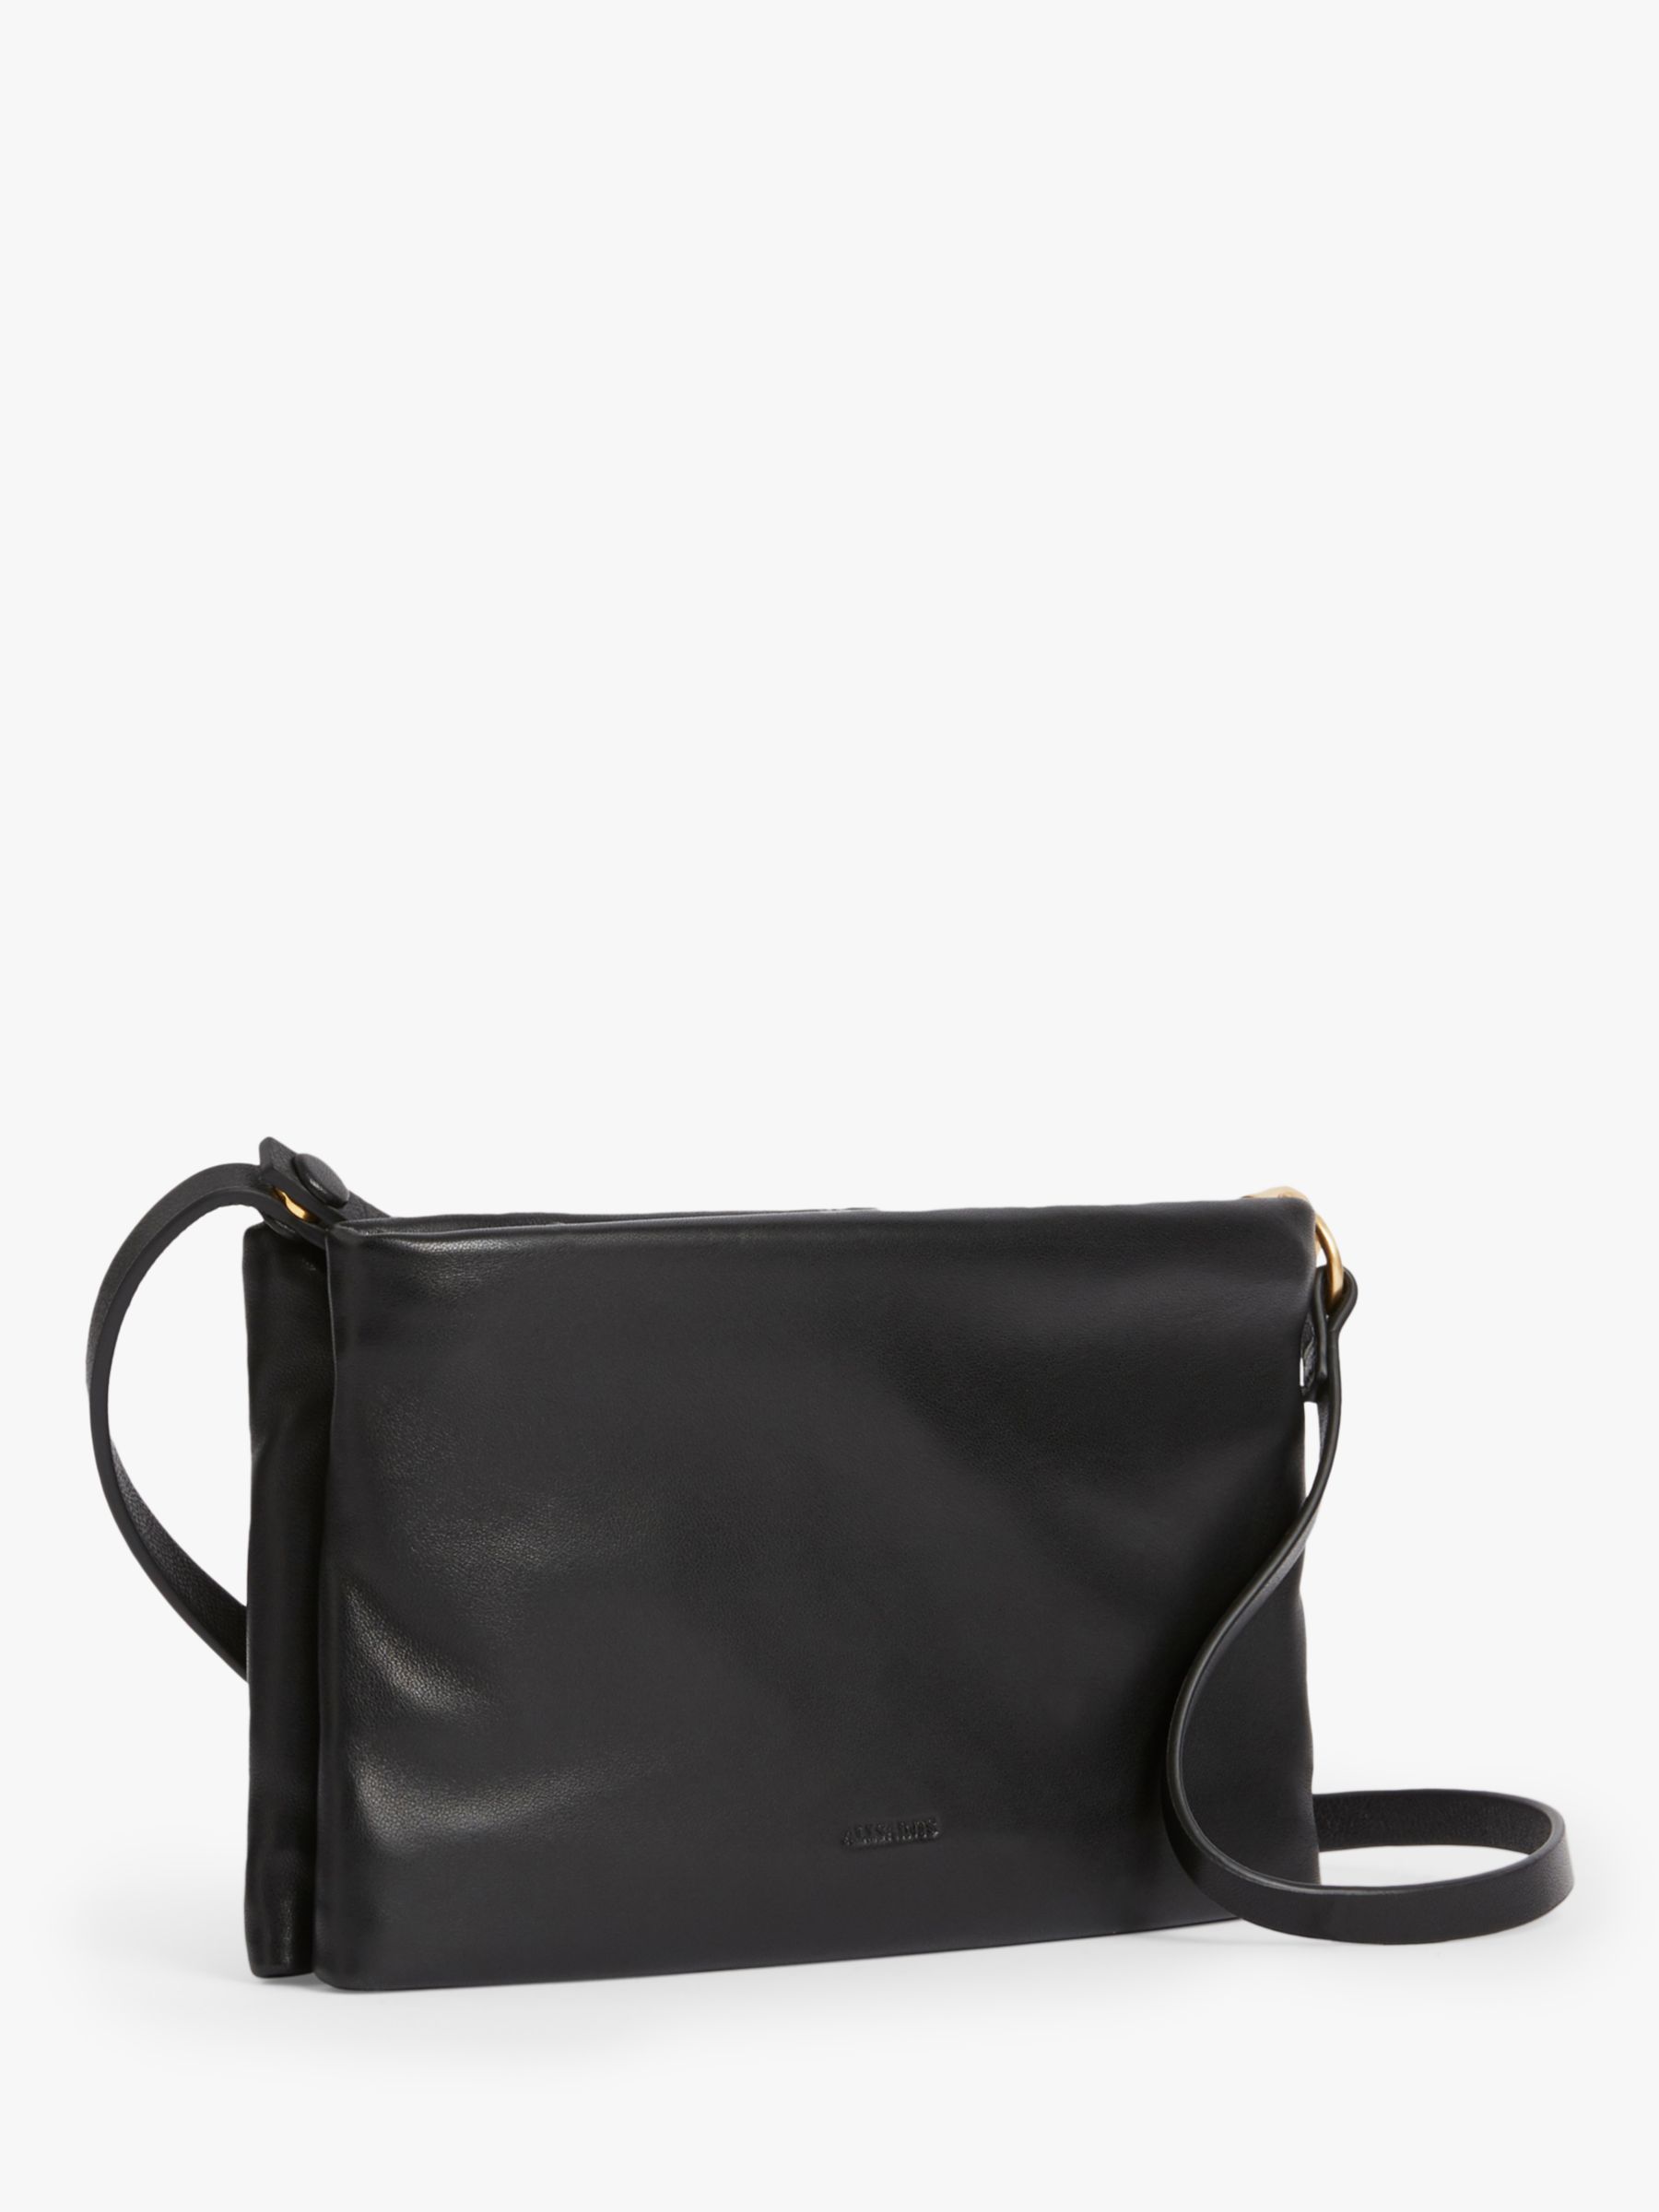 AllSaints Mila Leather Pouch Bag, Black at John Lewis & Partners